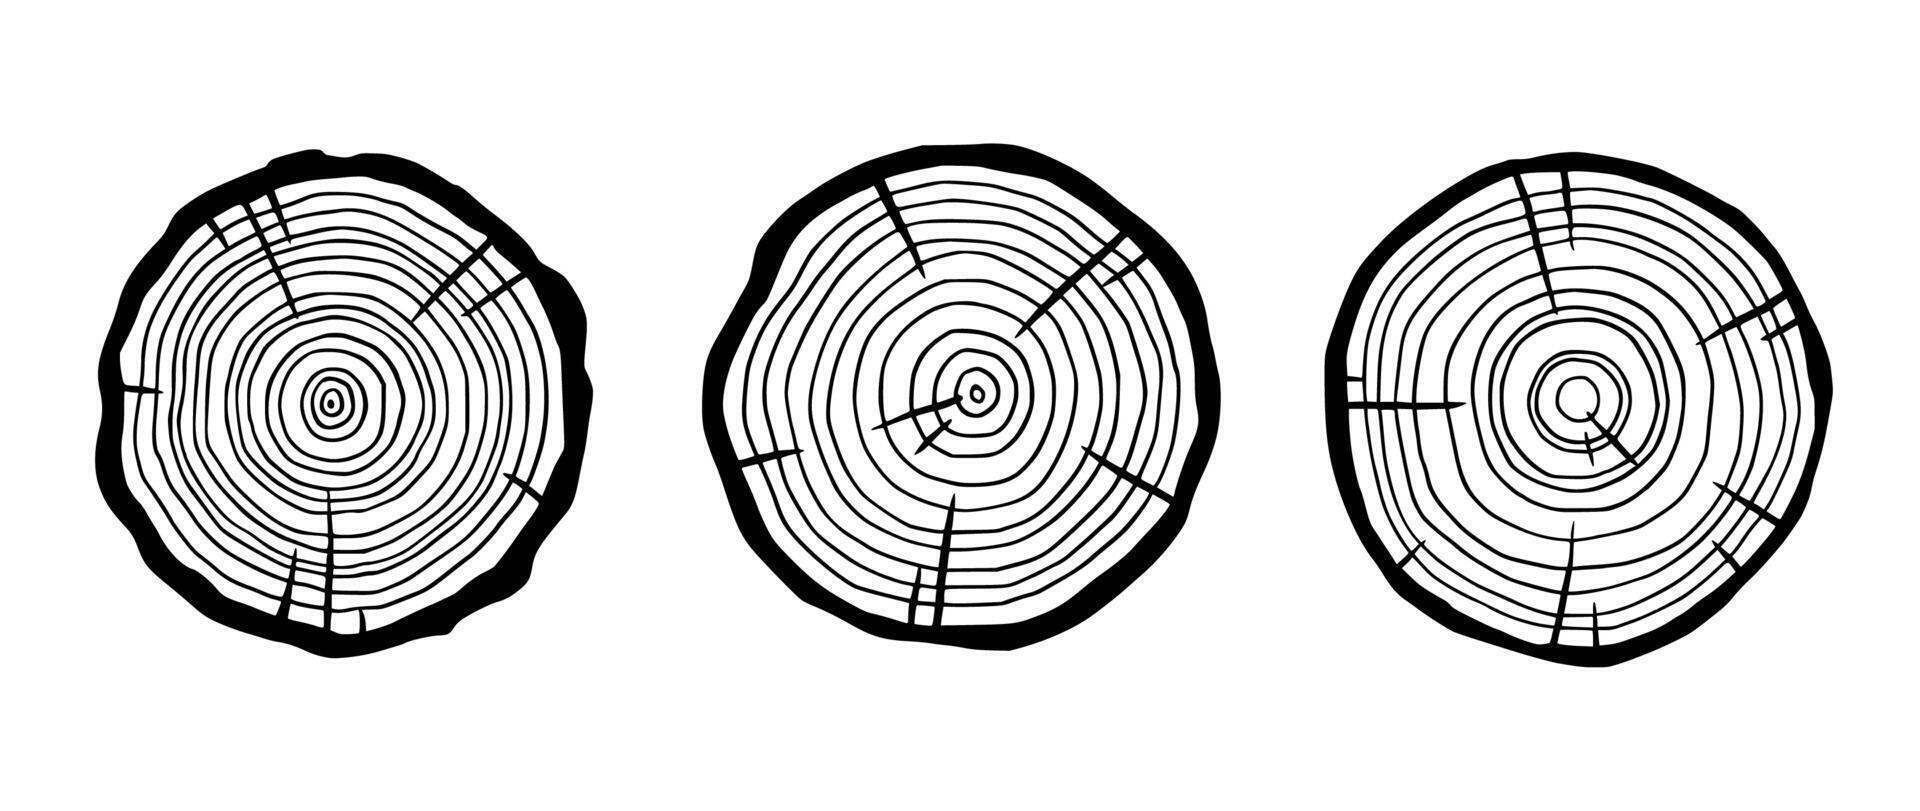 árbol anillo madera circulo colocar. mano dibujado árbol anillo patrón, línea onda circulo madera textura. madera orgánico rebanada línea diseño. vector